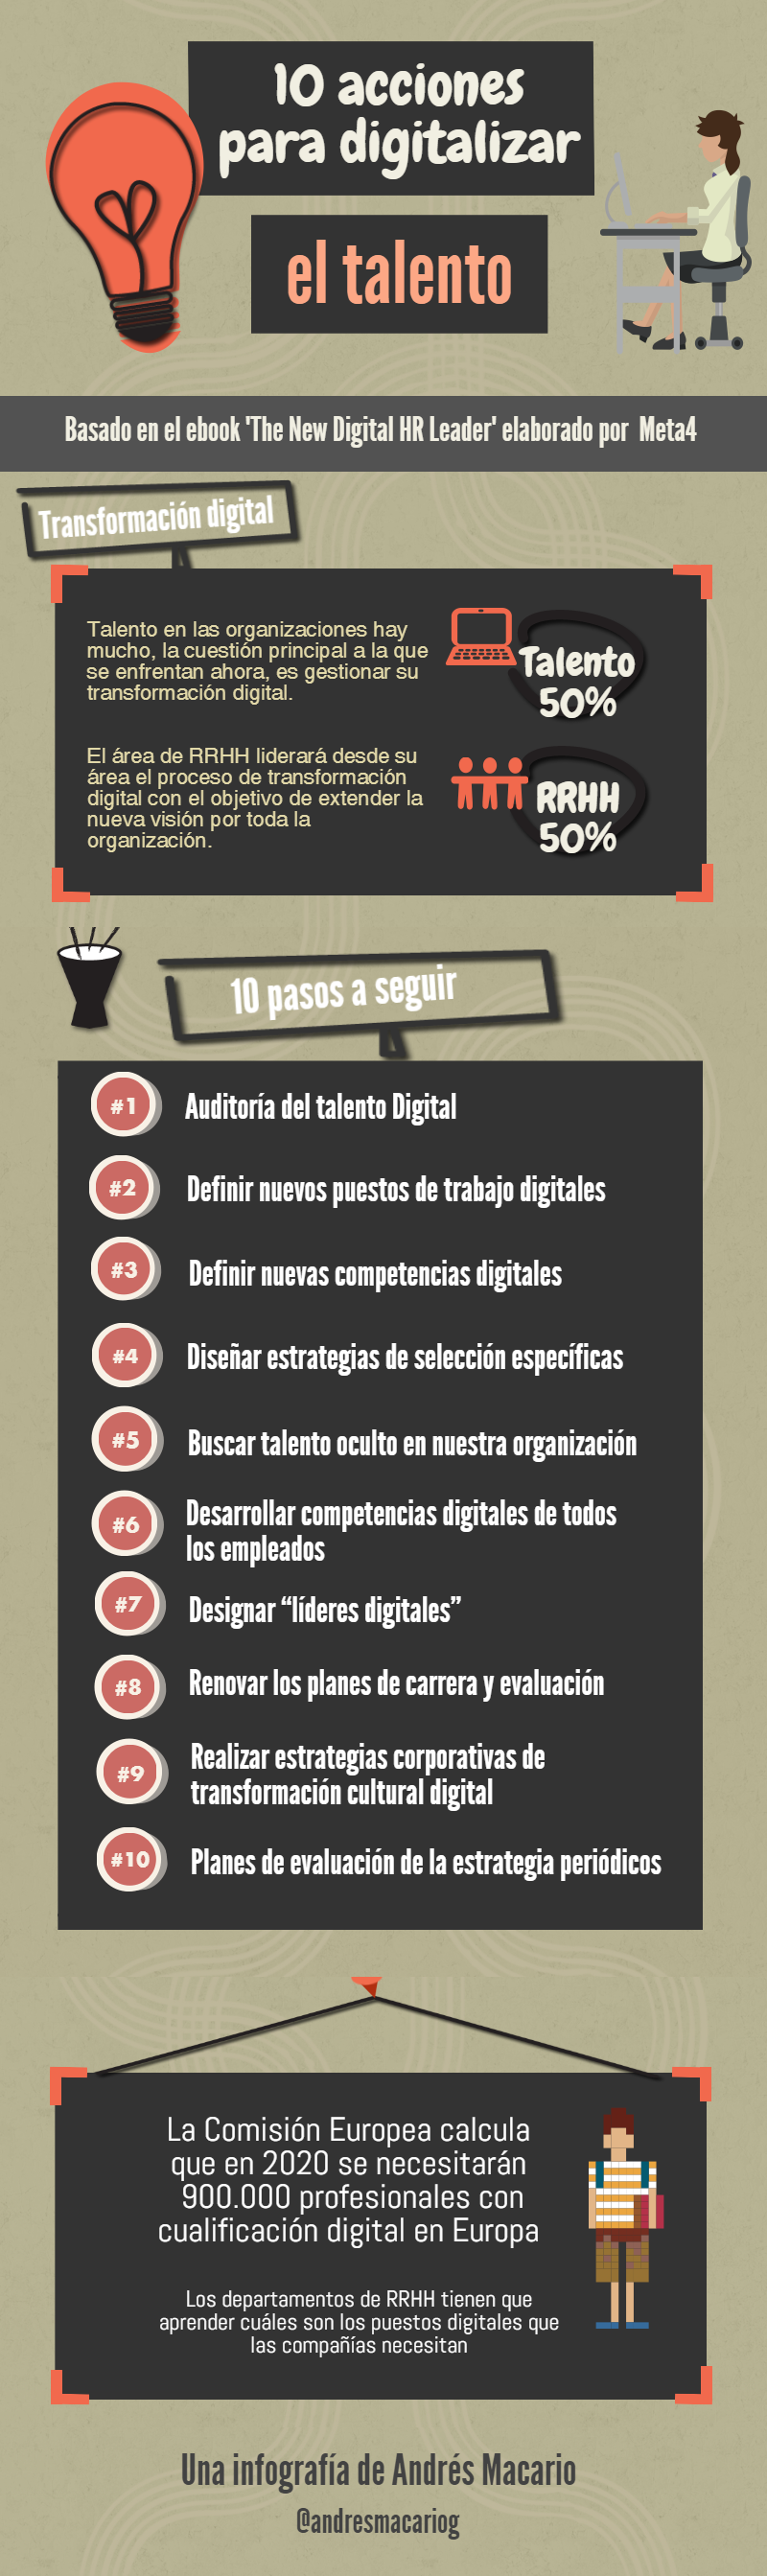 10 acciones digitalizar talento - Infografia Andres Macario